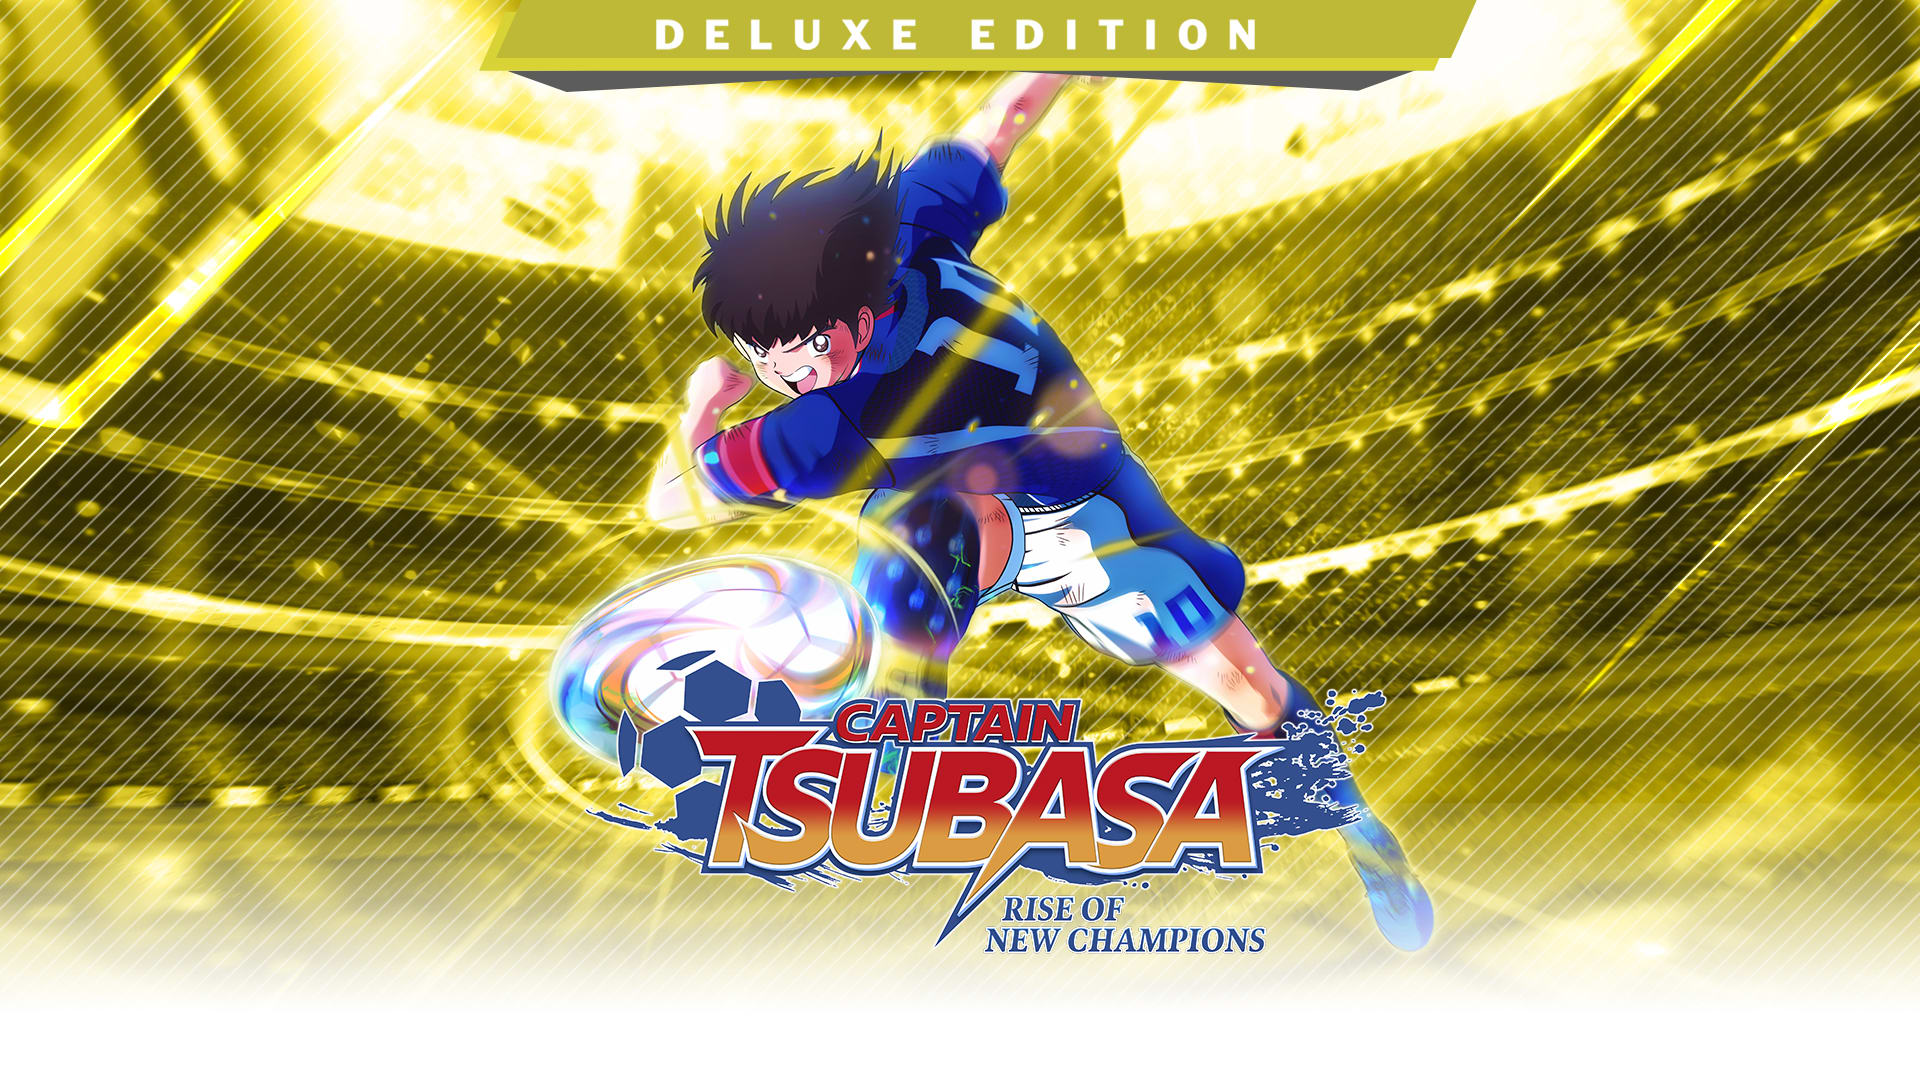 Captain Tsubasa: Rise of New Champions Deluxe Edition